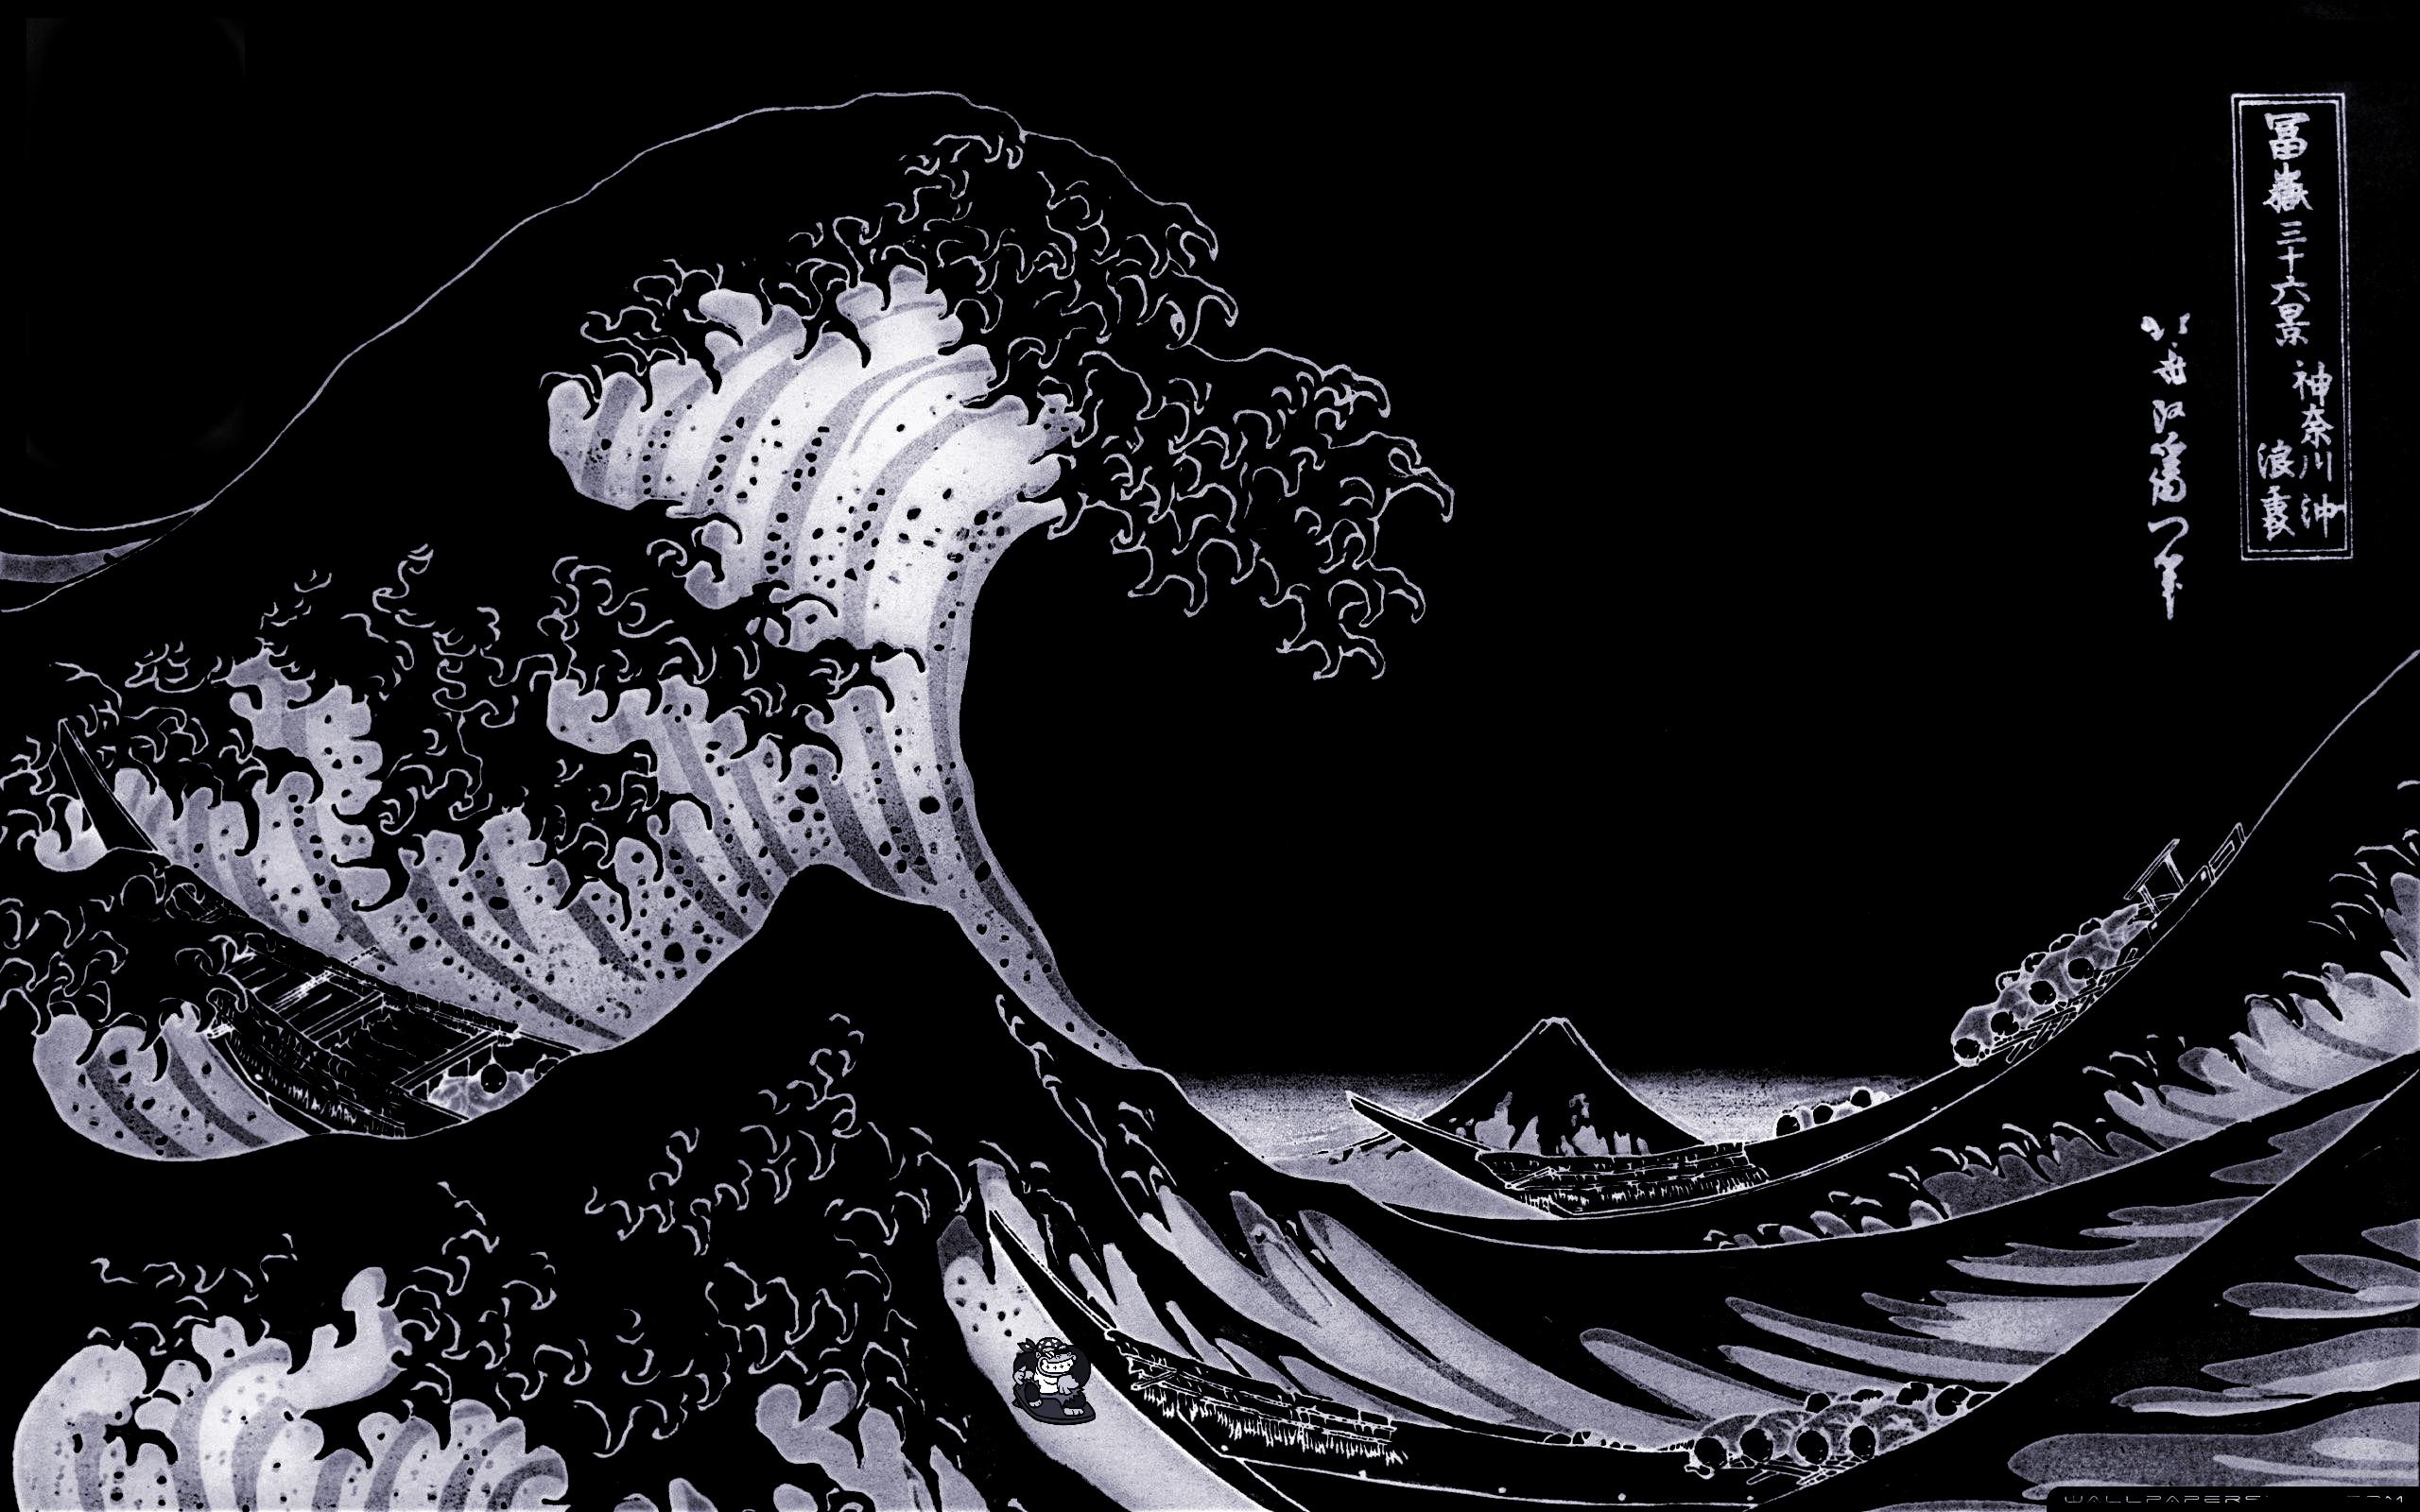 The great wave off kanagawa by hokusai - The Great Wave off Kanagawa